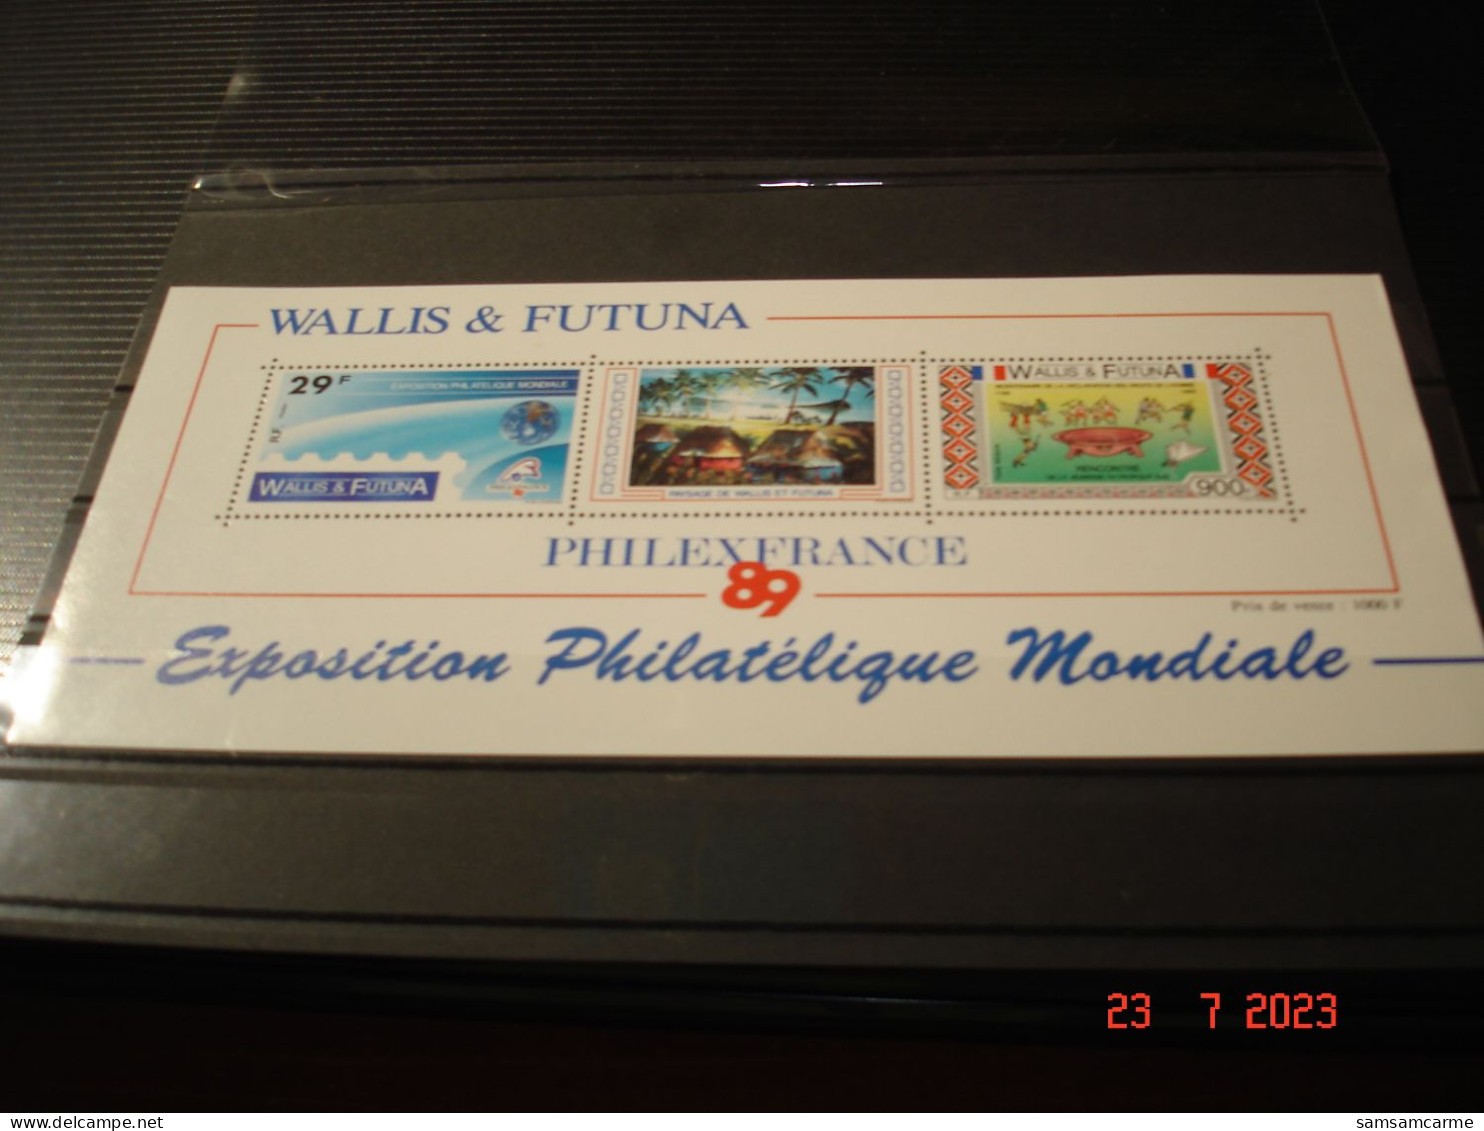 WALLIS ET FUTUNA    ANNEE  1989     BLOC FEUILLET NEUF N° 4    "  PHILEX FANCE 89 "  EXPOSITION PHILATELIQUE MONDIALE - Blocchi & Foglietti